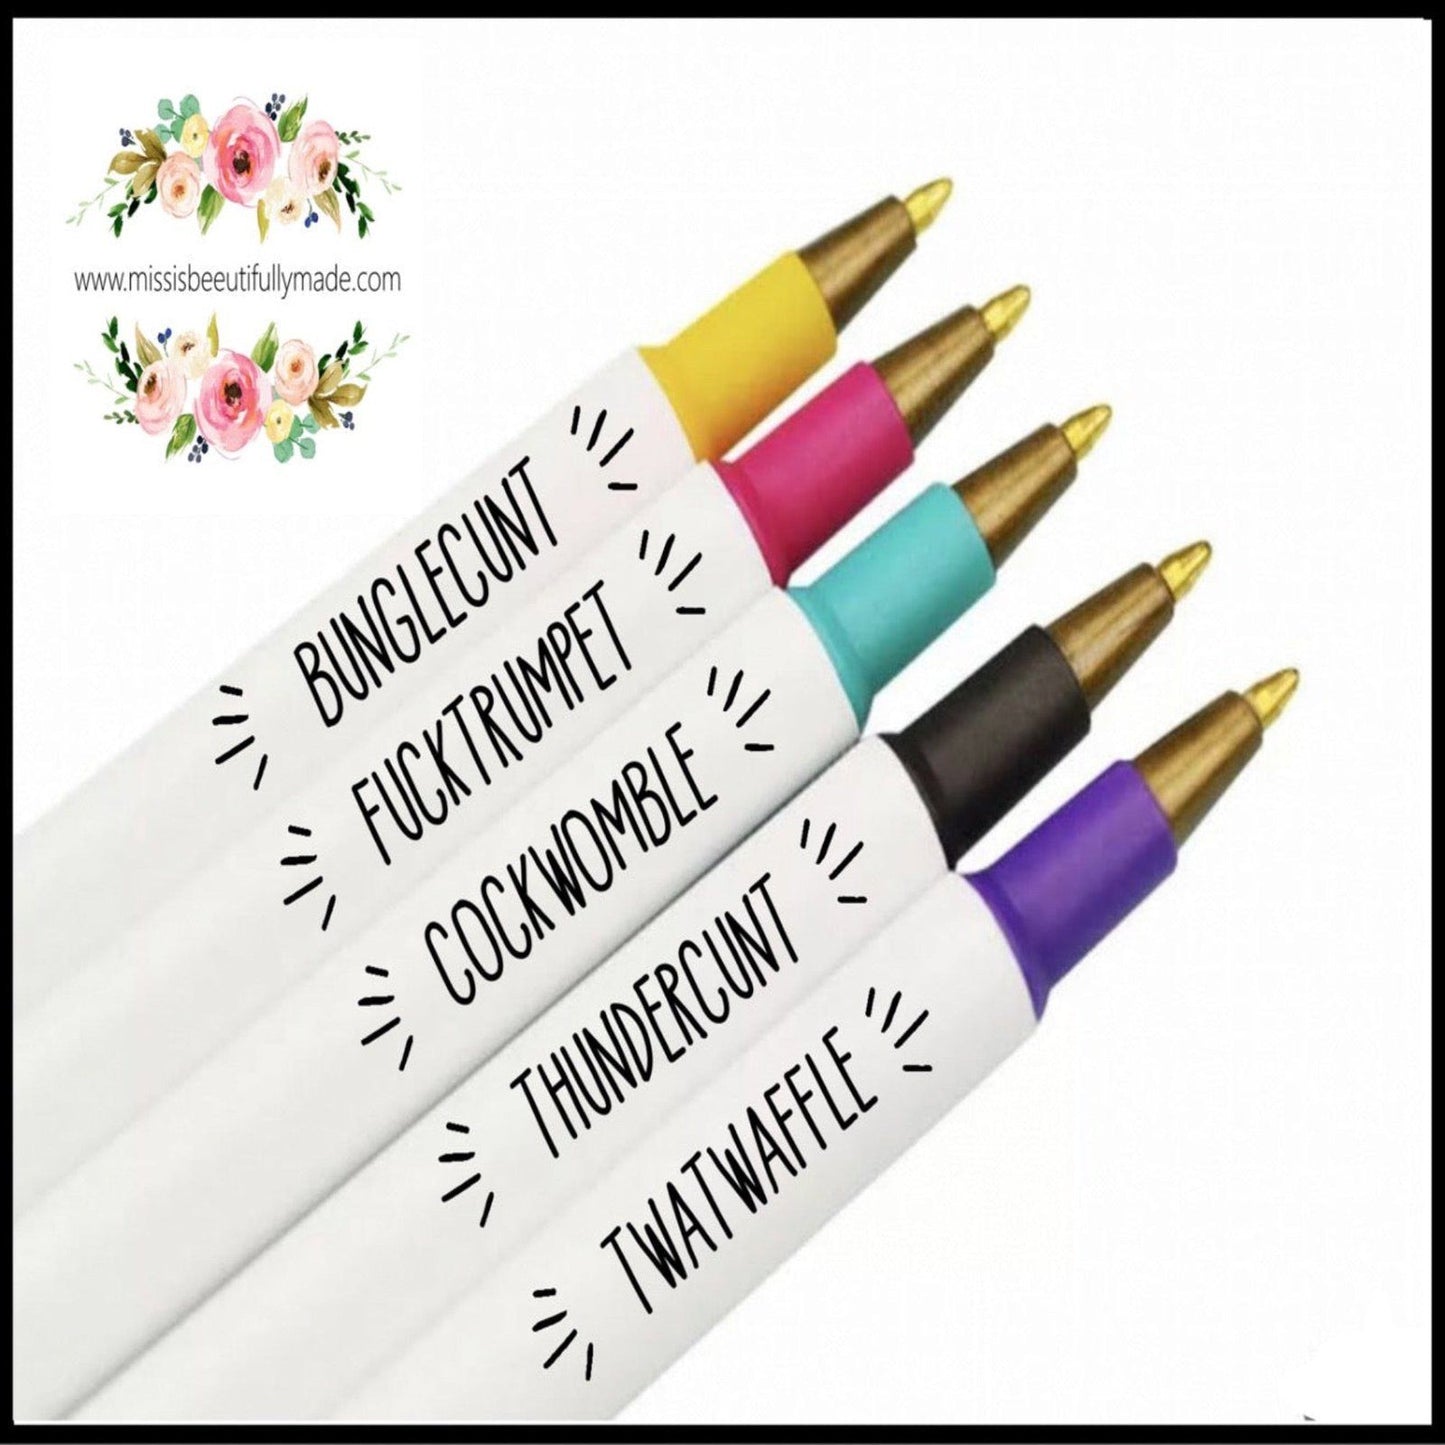 5 Pack of coloured tip pens - Designs include -   BUNGLECUNT  FUCKTRUMPET  COCKWOMBLE  THUNDERCUNT  TWATWAFFLE. Pen tip colours are yellow, pink, blue, black, purple